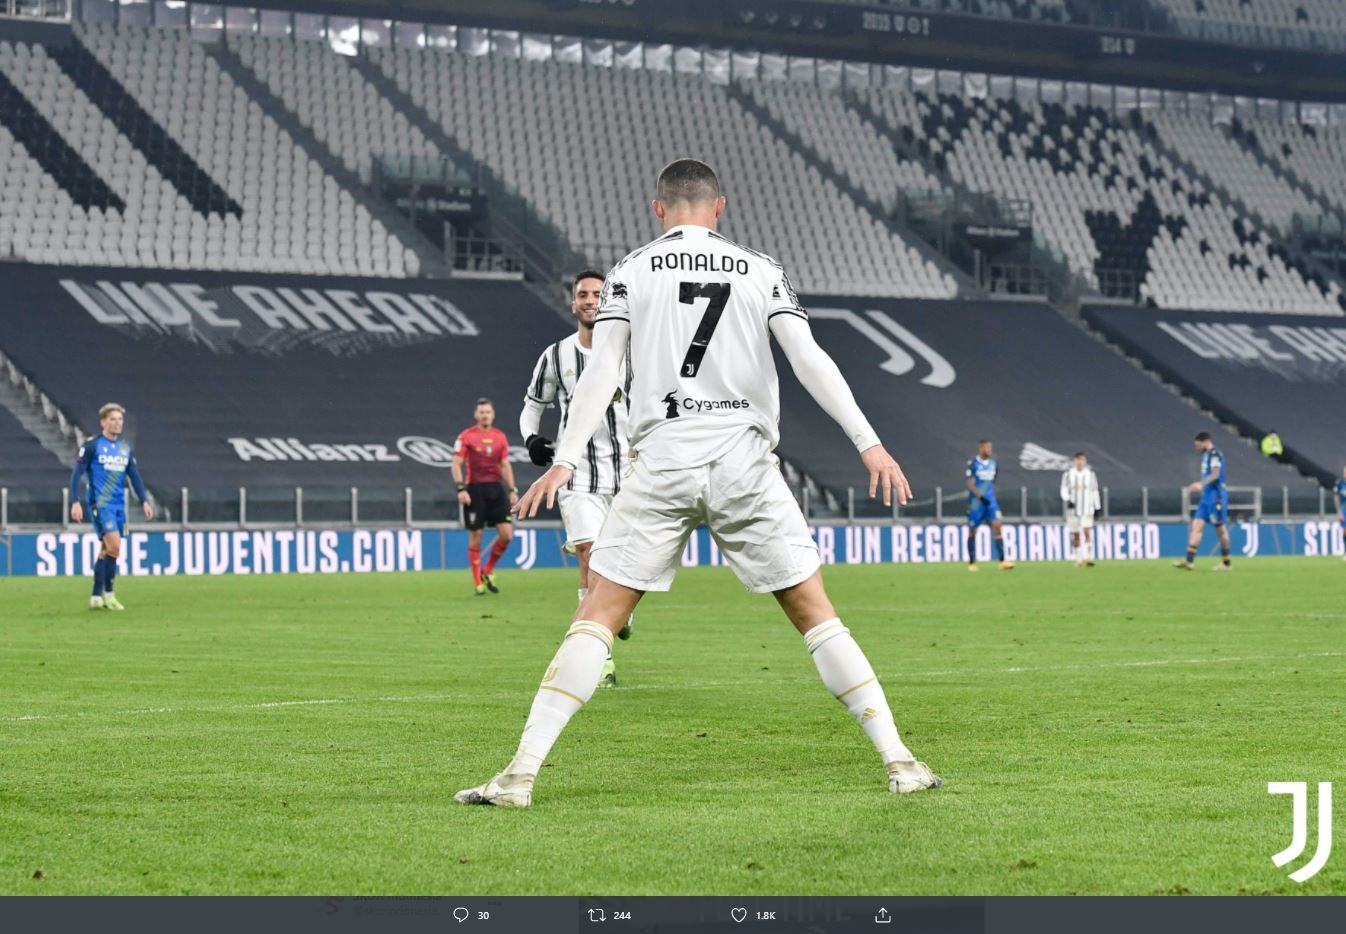 Cristiano Ronaldo cetak 2 gol ke gawang Udinese, sekaligus lampaui rekor Pele